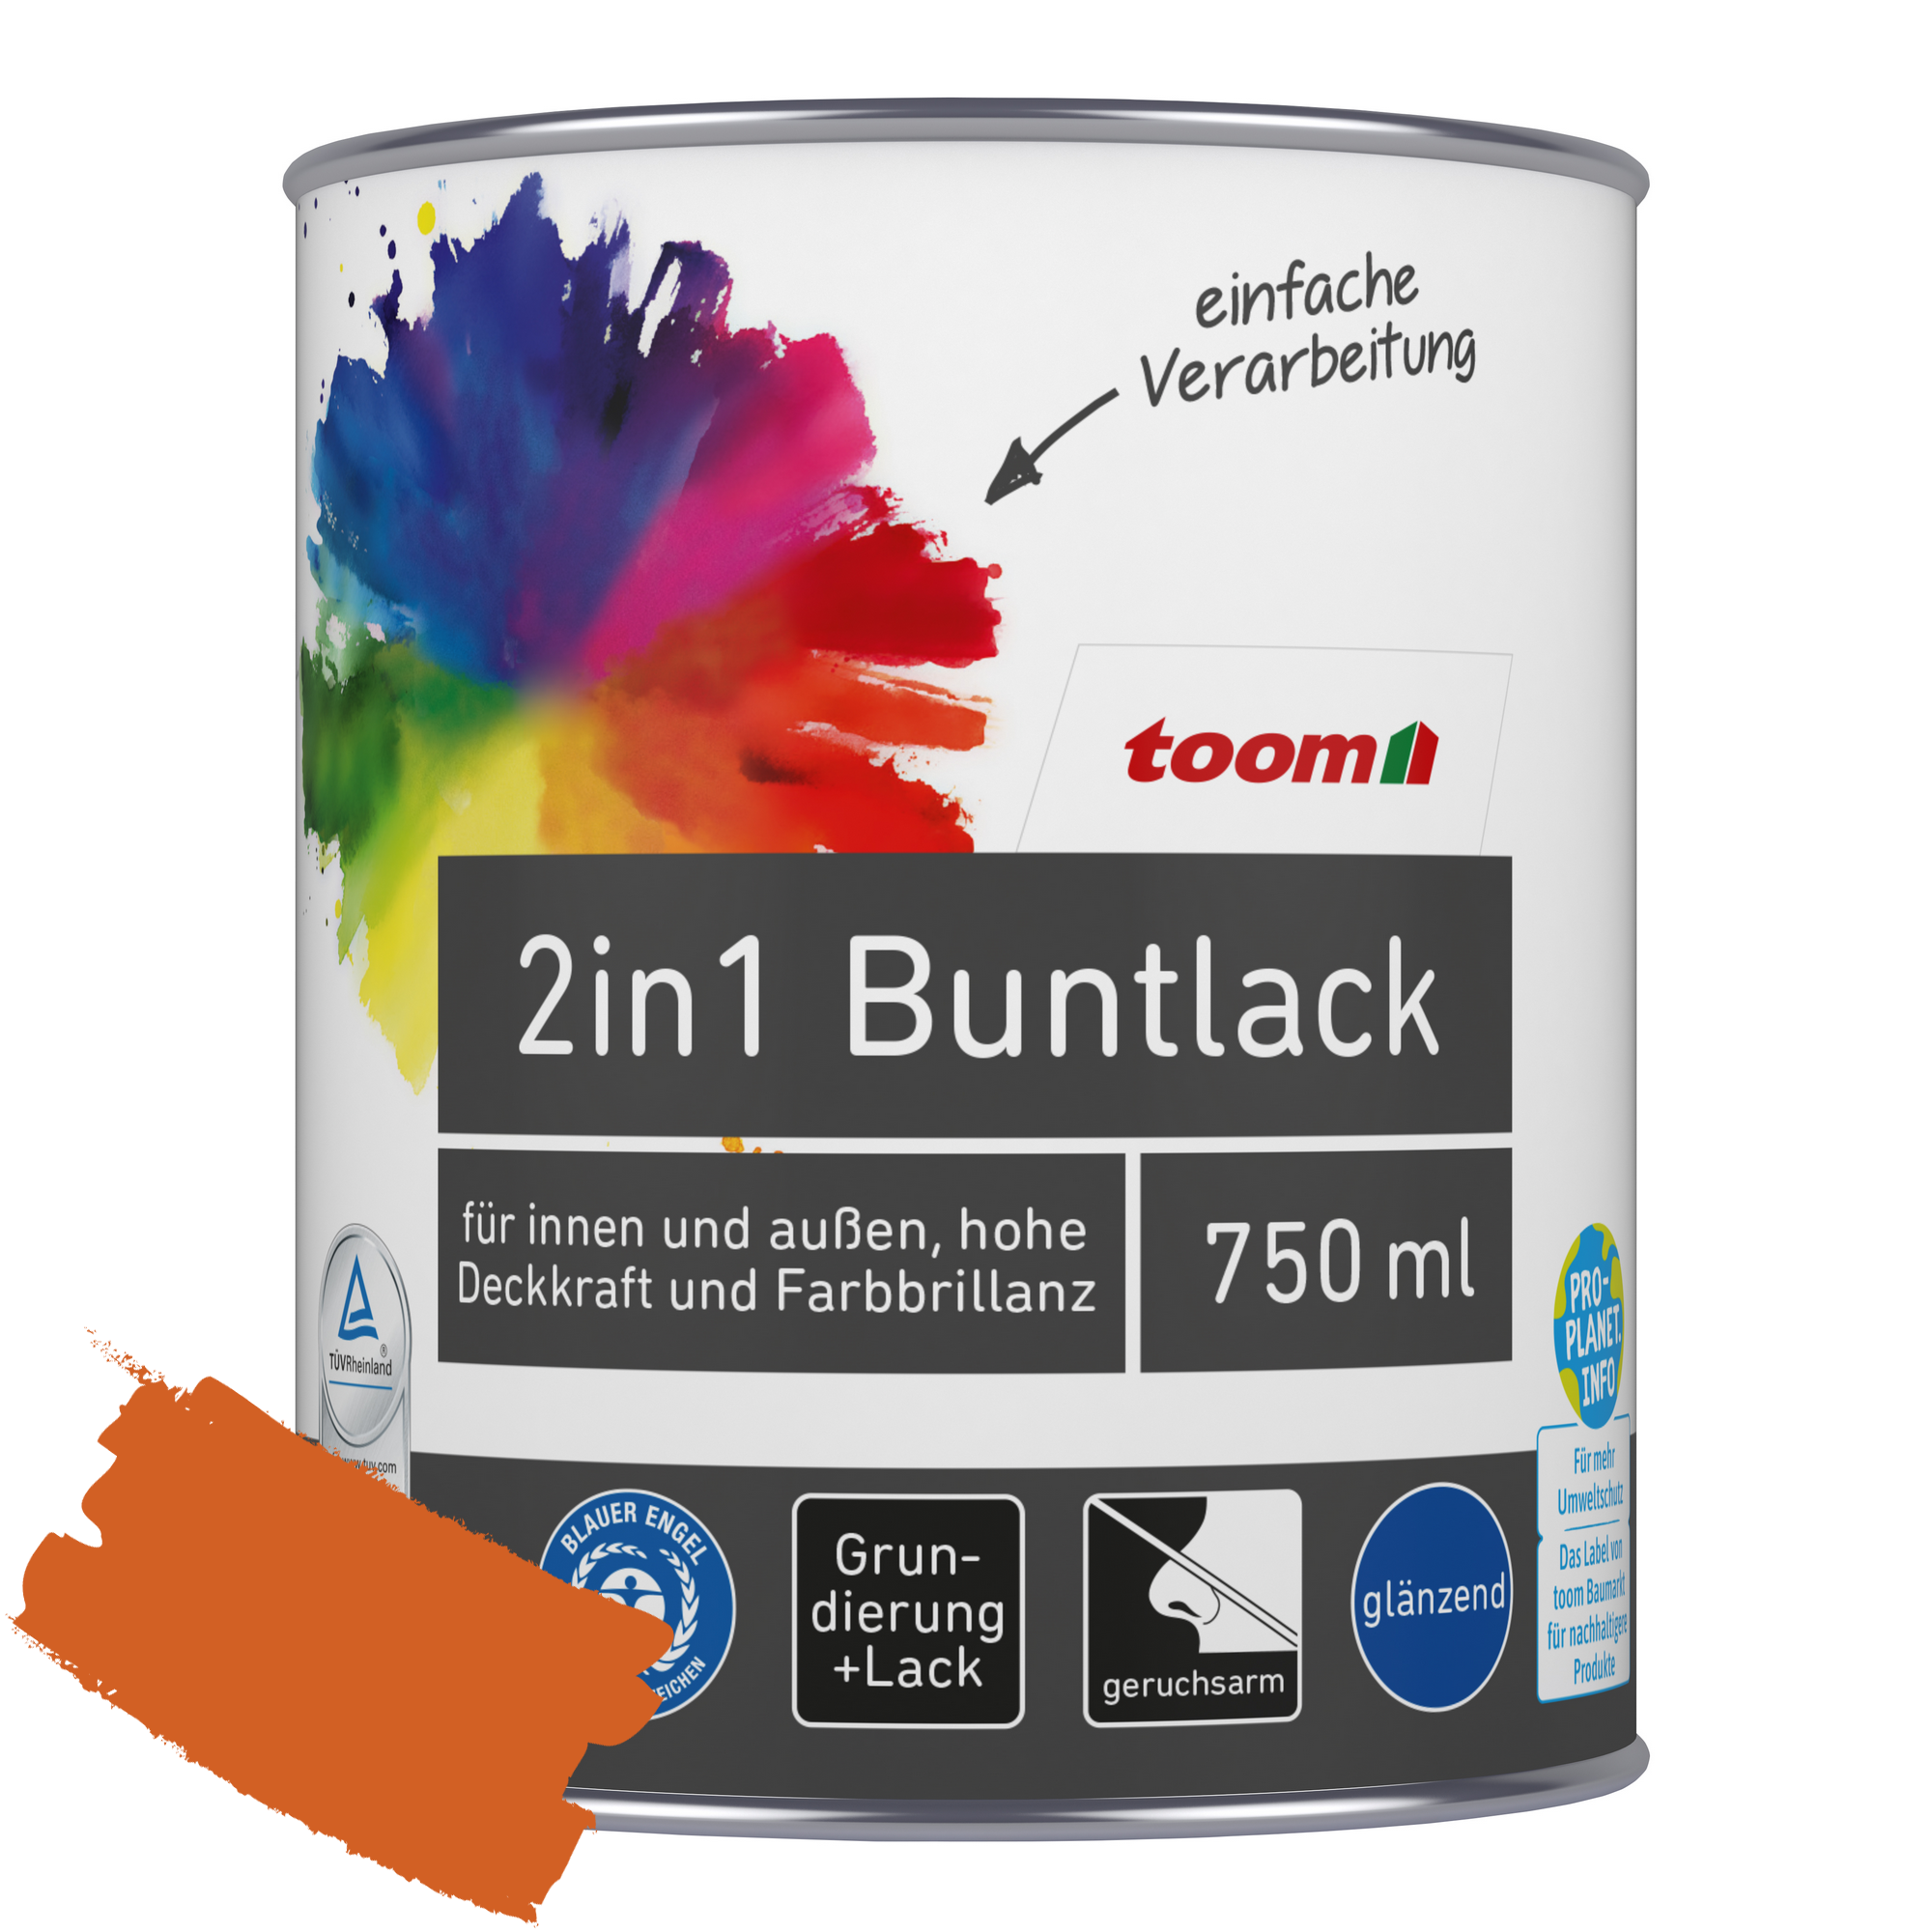 2in1 Buntlack 'Feuerglut' orange glänzend 750 ml + product picture